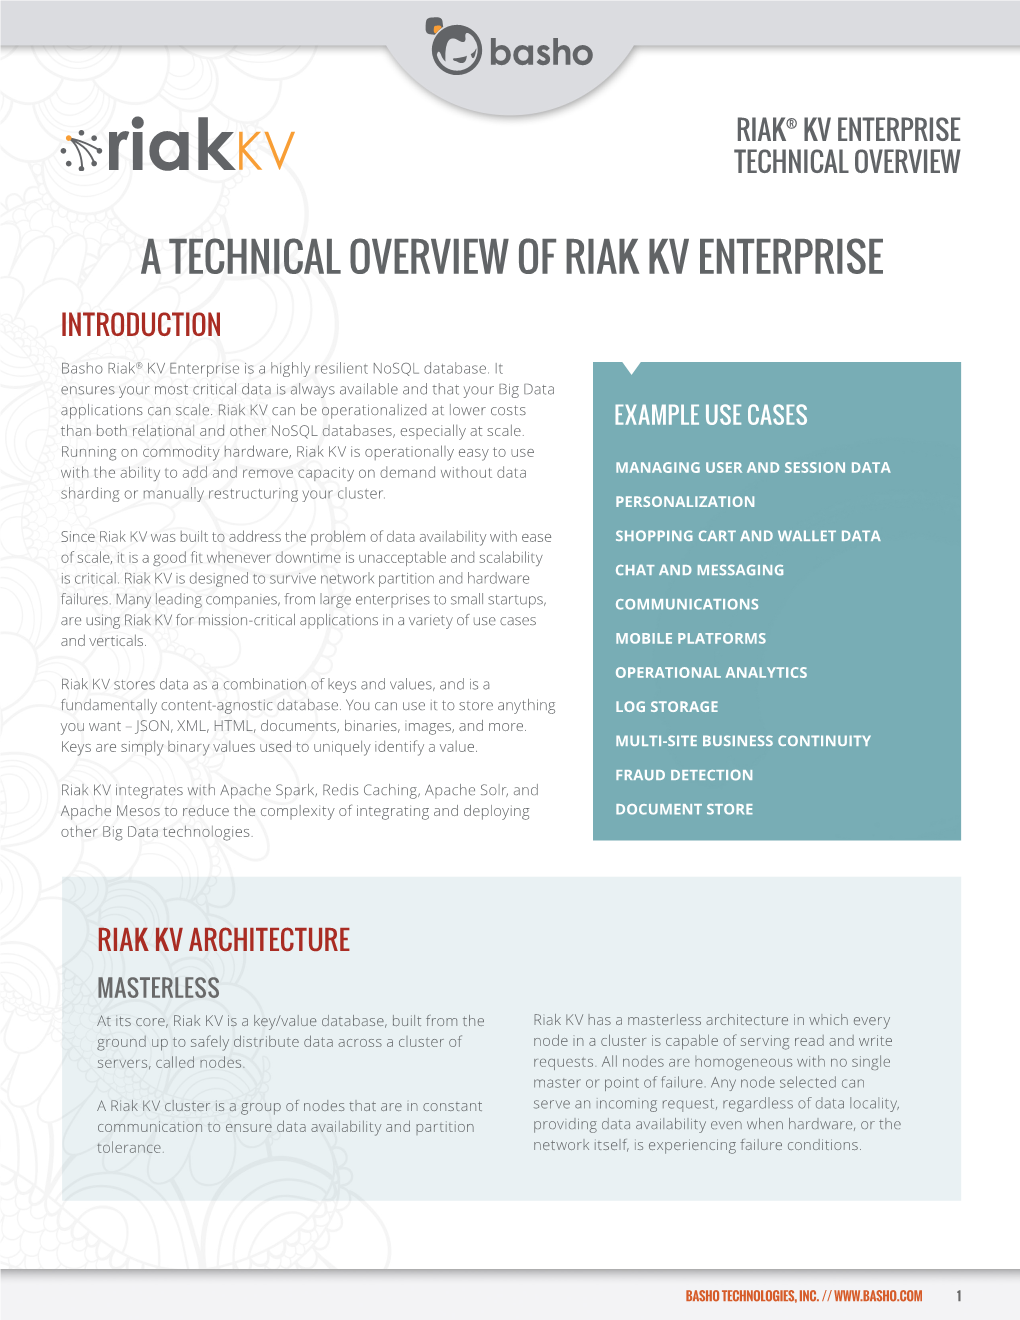 A Technical Overview of Riak Kv Enterprise